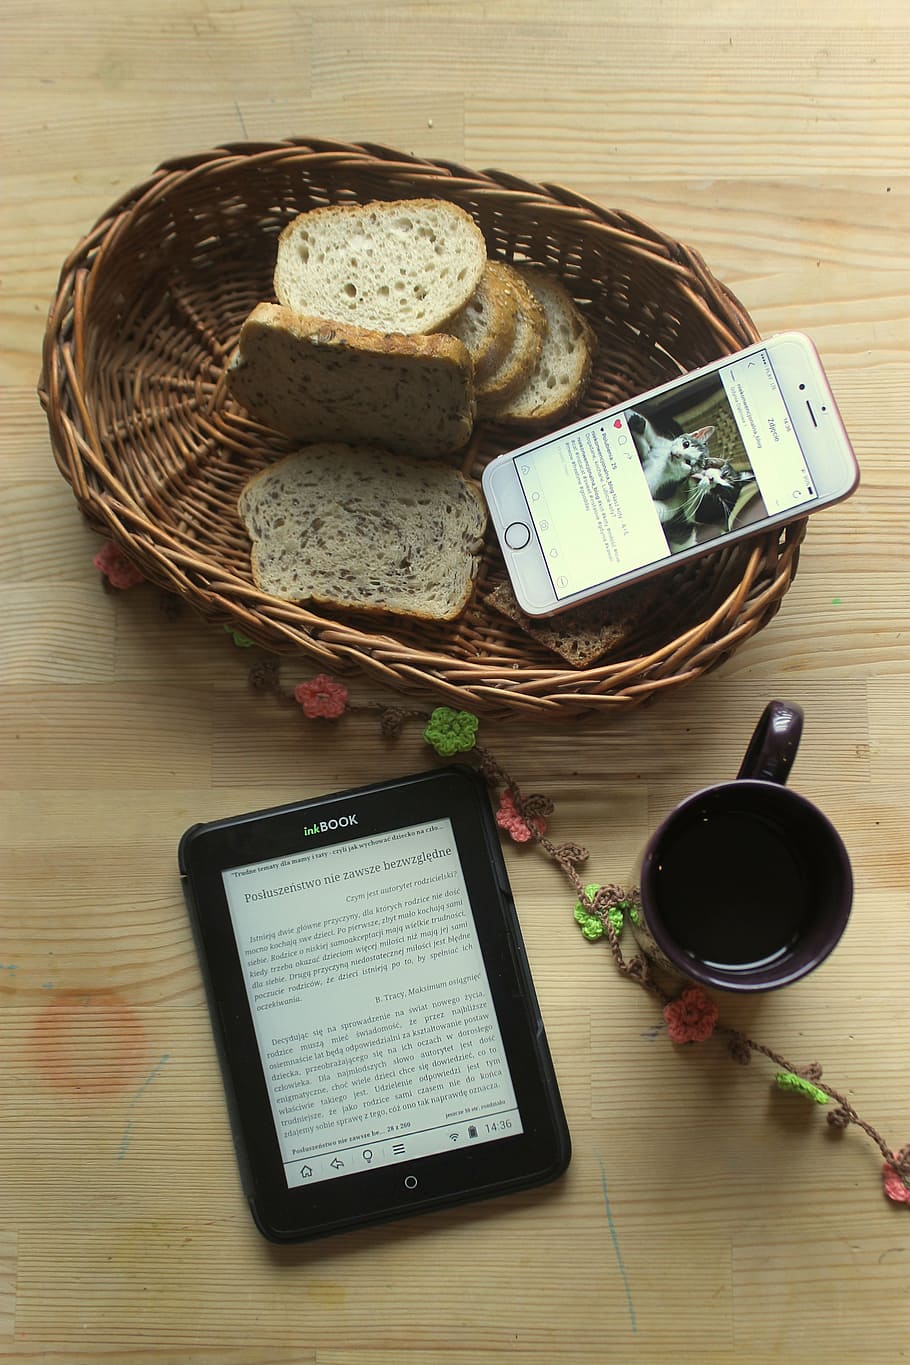 coffee, breakfast, iphone, flowers, wreath, crochet hook, reader, ebook, bread, good morning